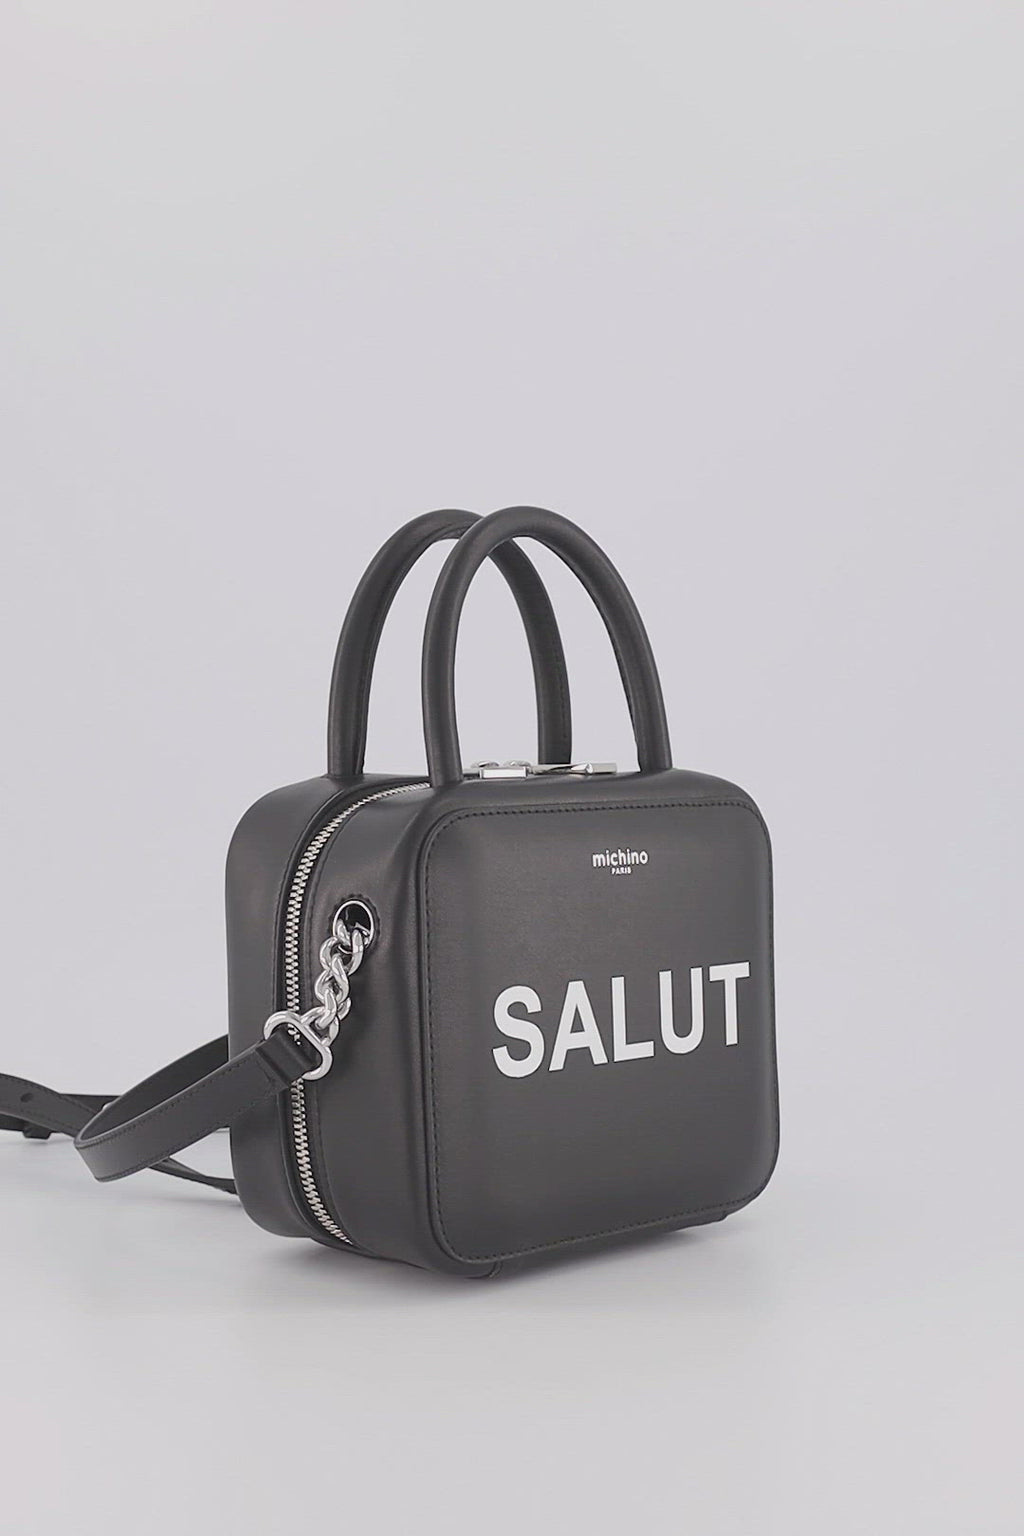 michino paris SALUT bag Black ミチノパリ | www.fleettracktz.com